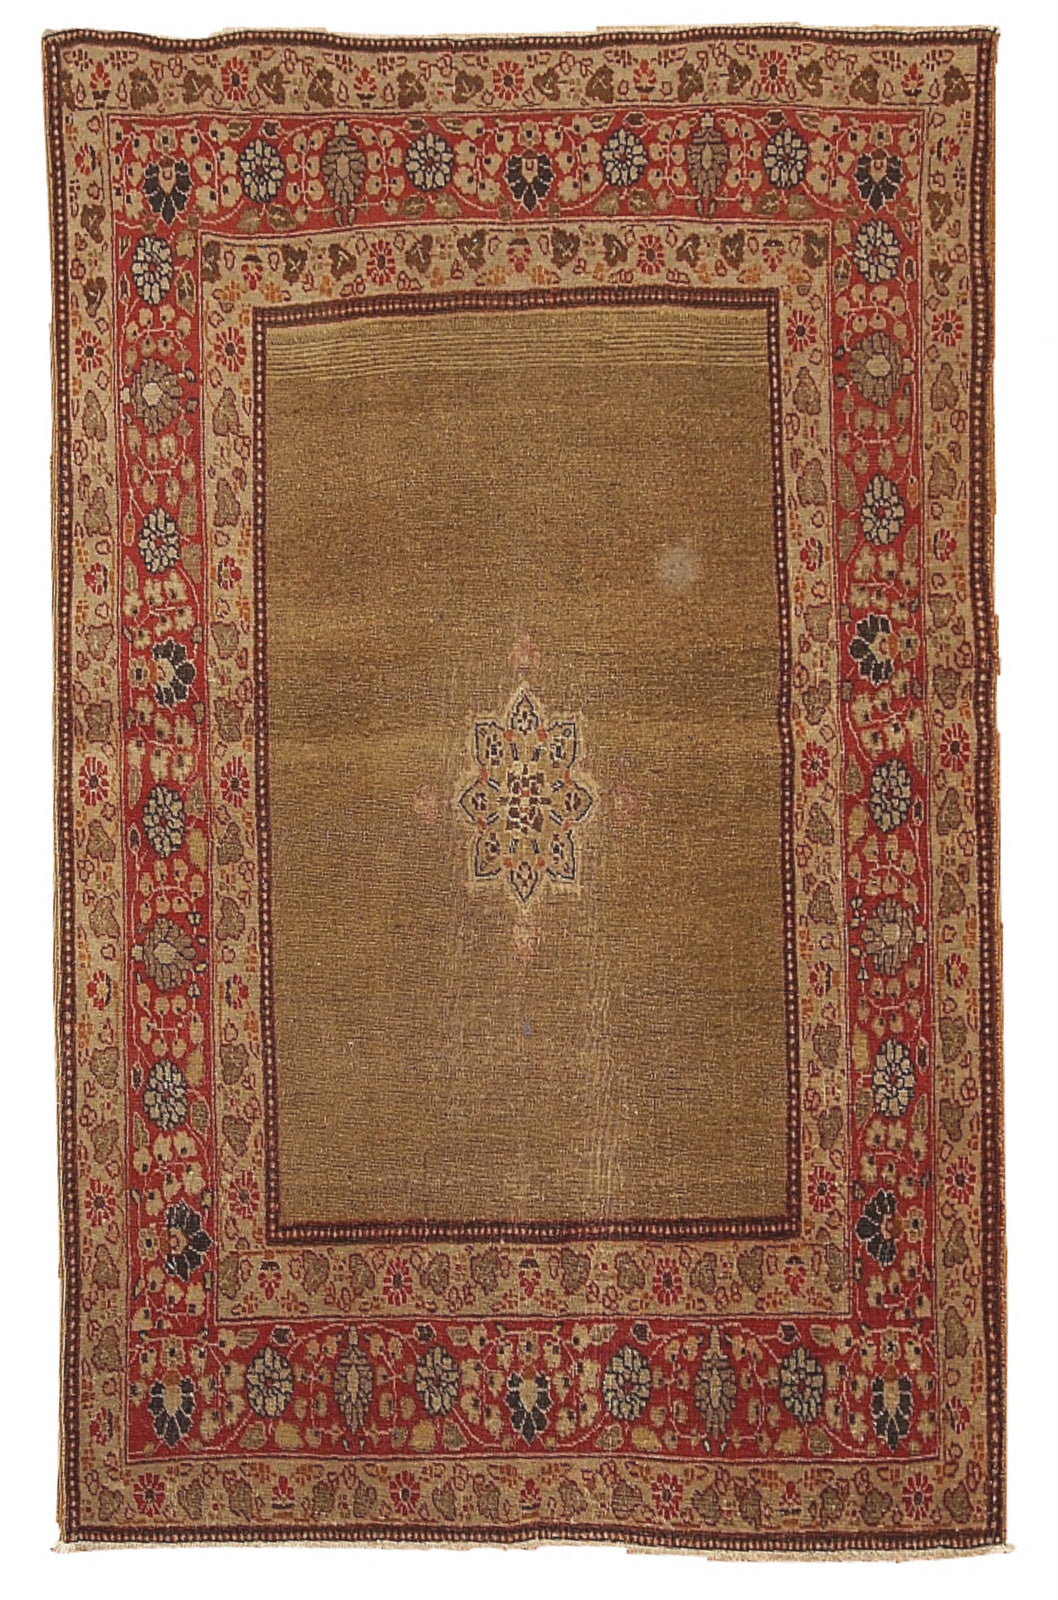 Handmade antique Persian Tabriz rug 3.10' x 5.5' (121cm x 167cm) 1900s - 1B152